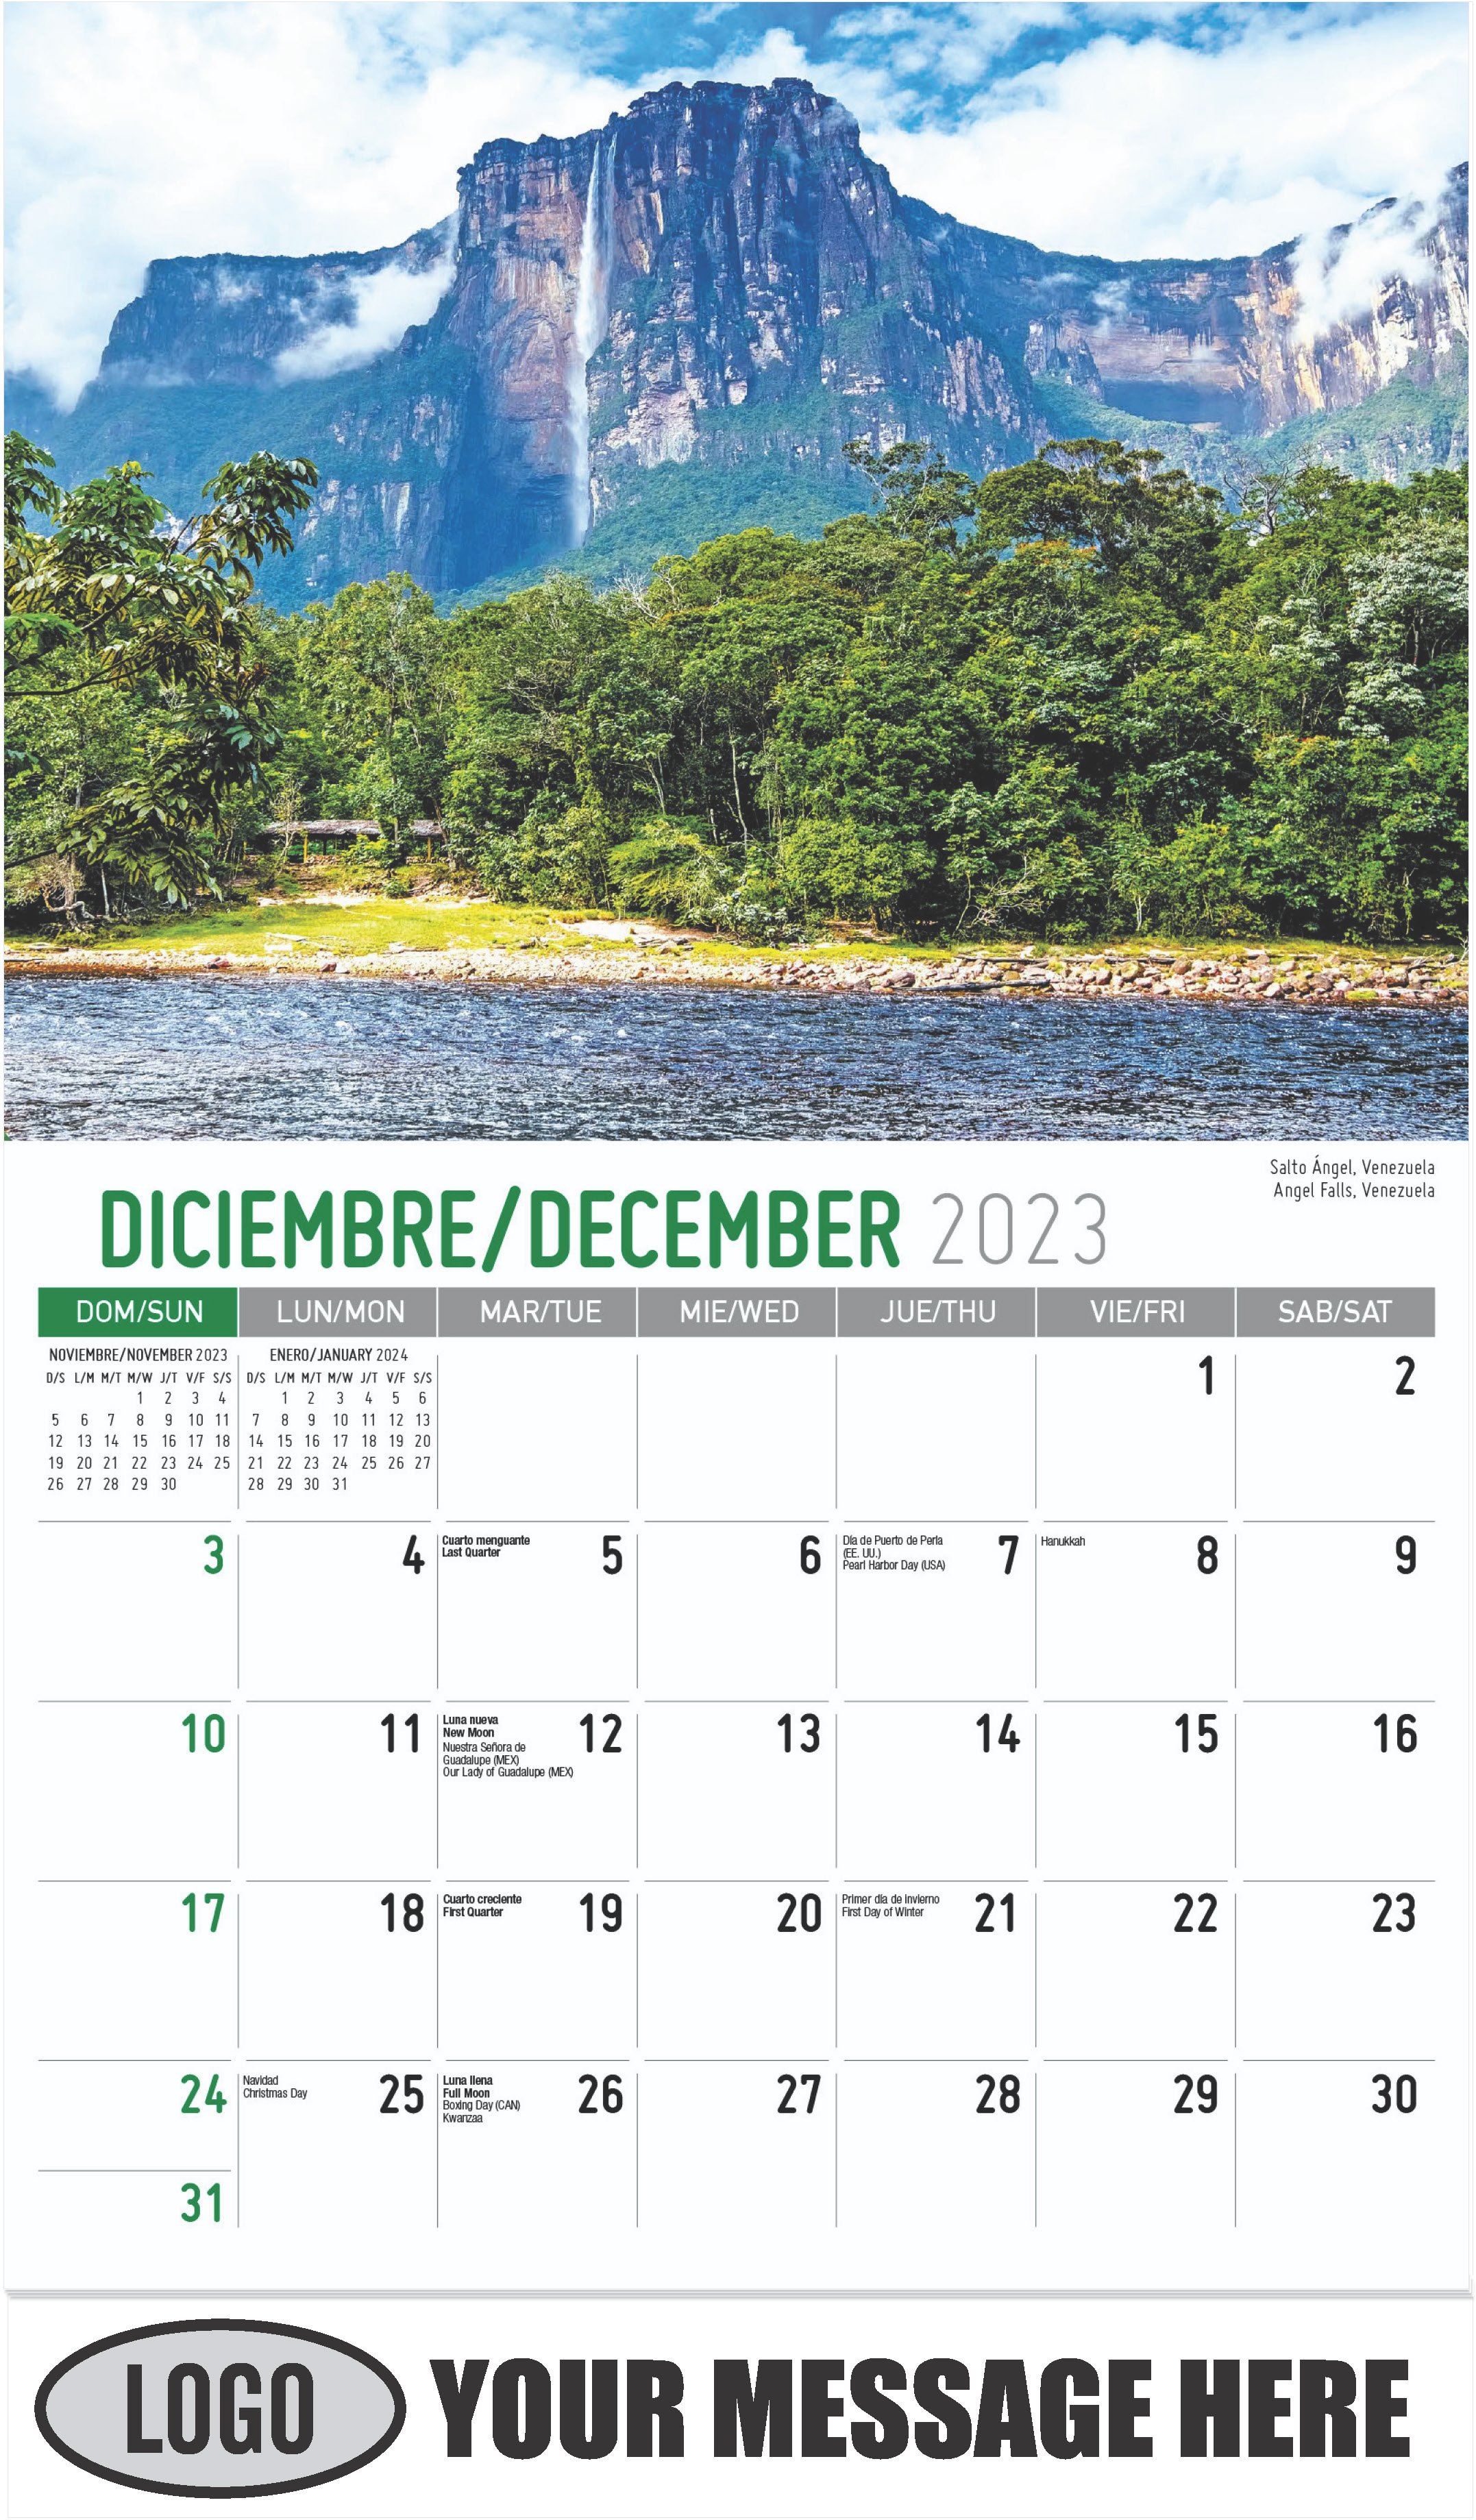 Angel Falls, Venezuela - December 2023 - Beauty of Latin America 2023 Promotional Calendar